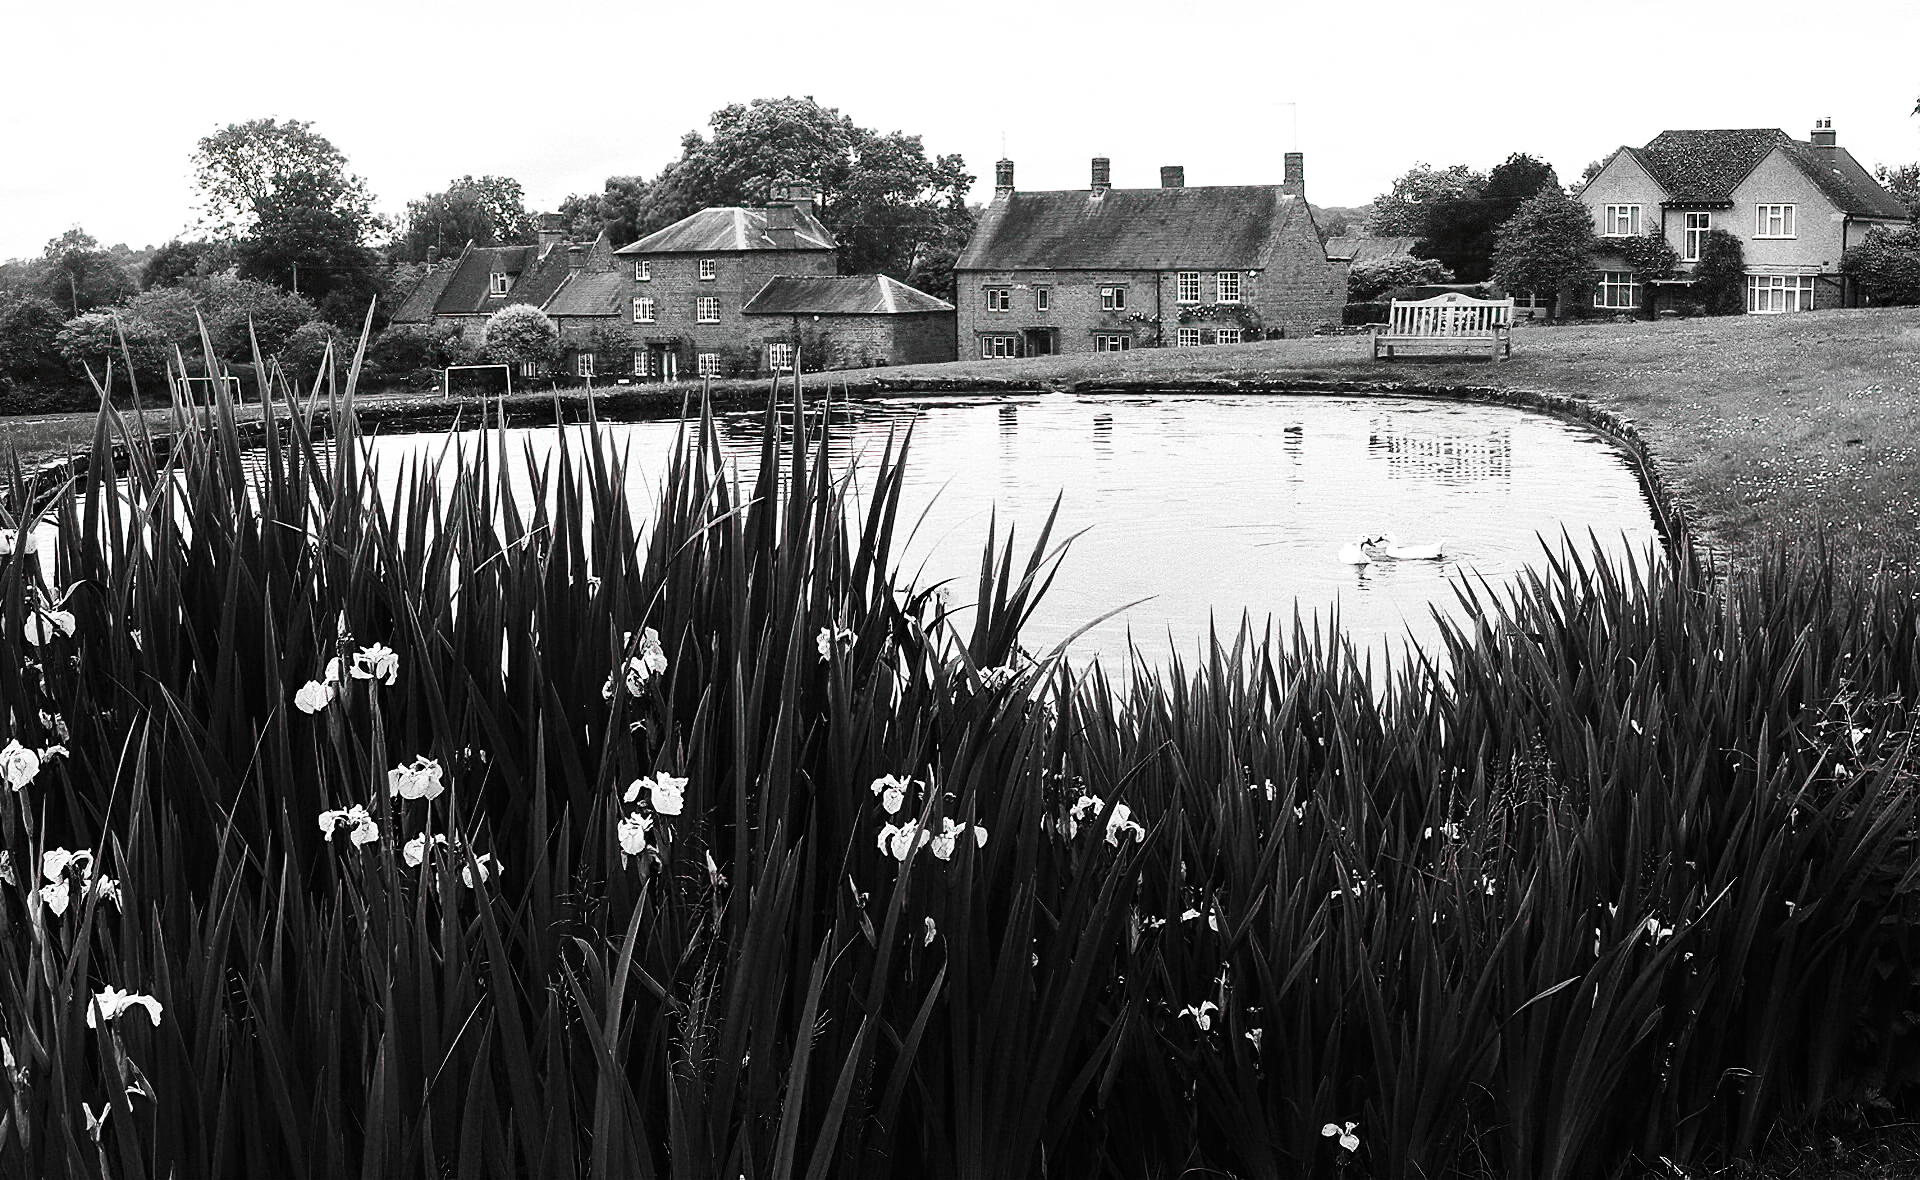 Feed the ducks at the pond overlooking Warmington Village